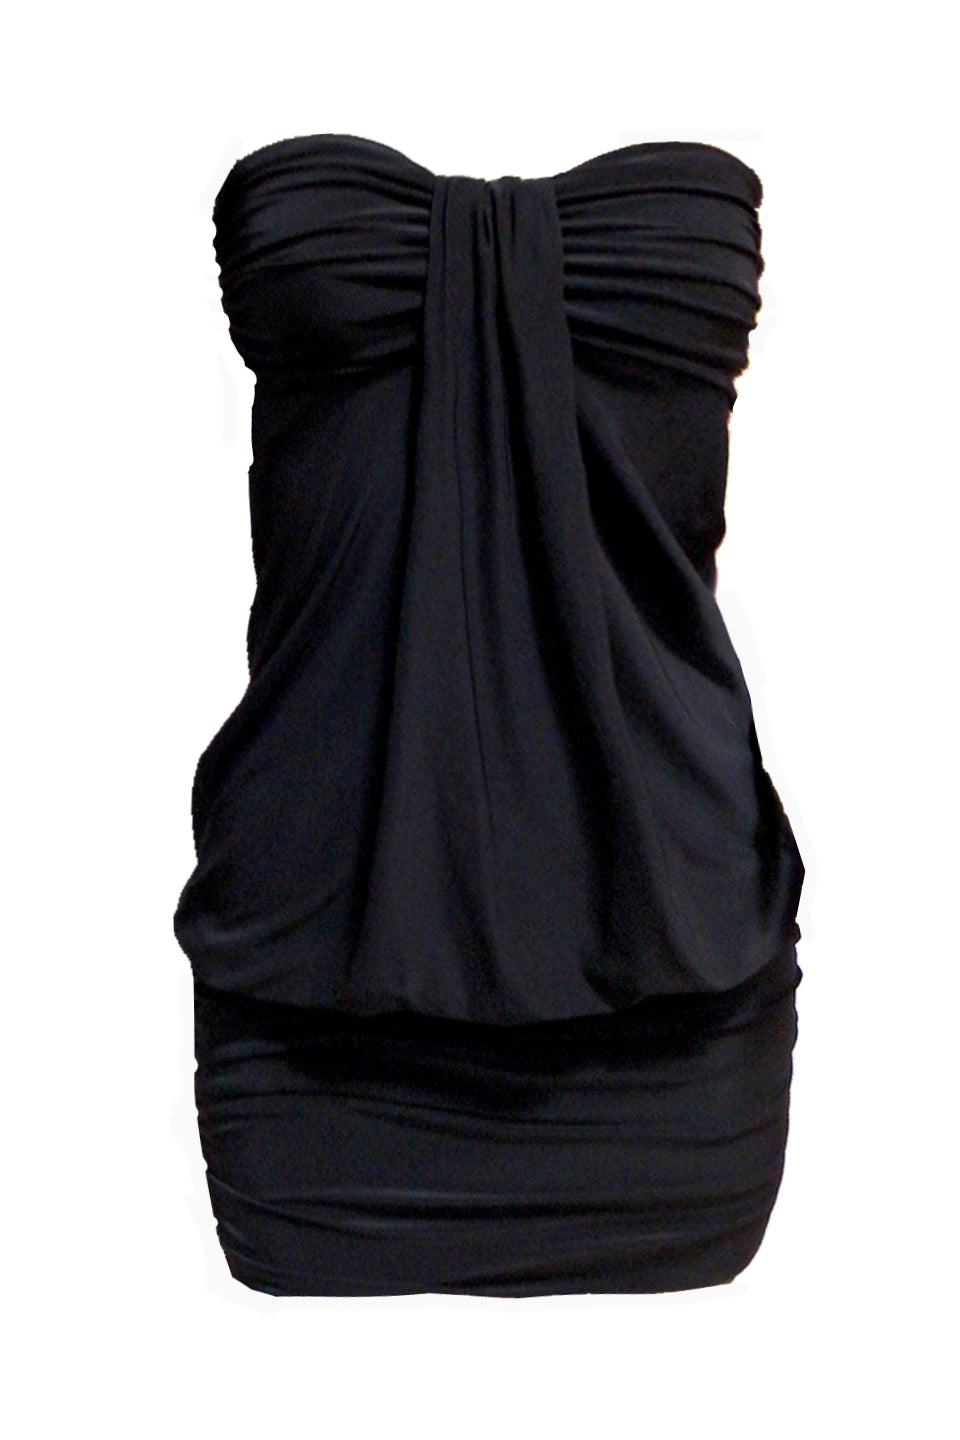 MISS PINKI Amber bandeau party mini dress in slinky knit fabric - black